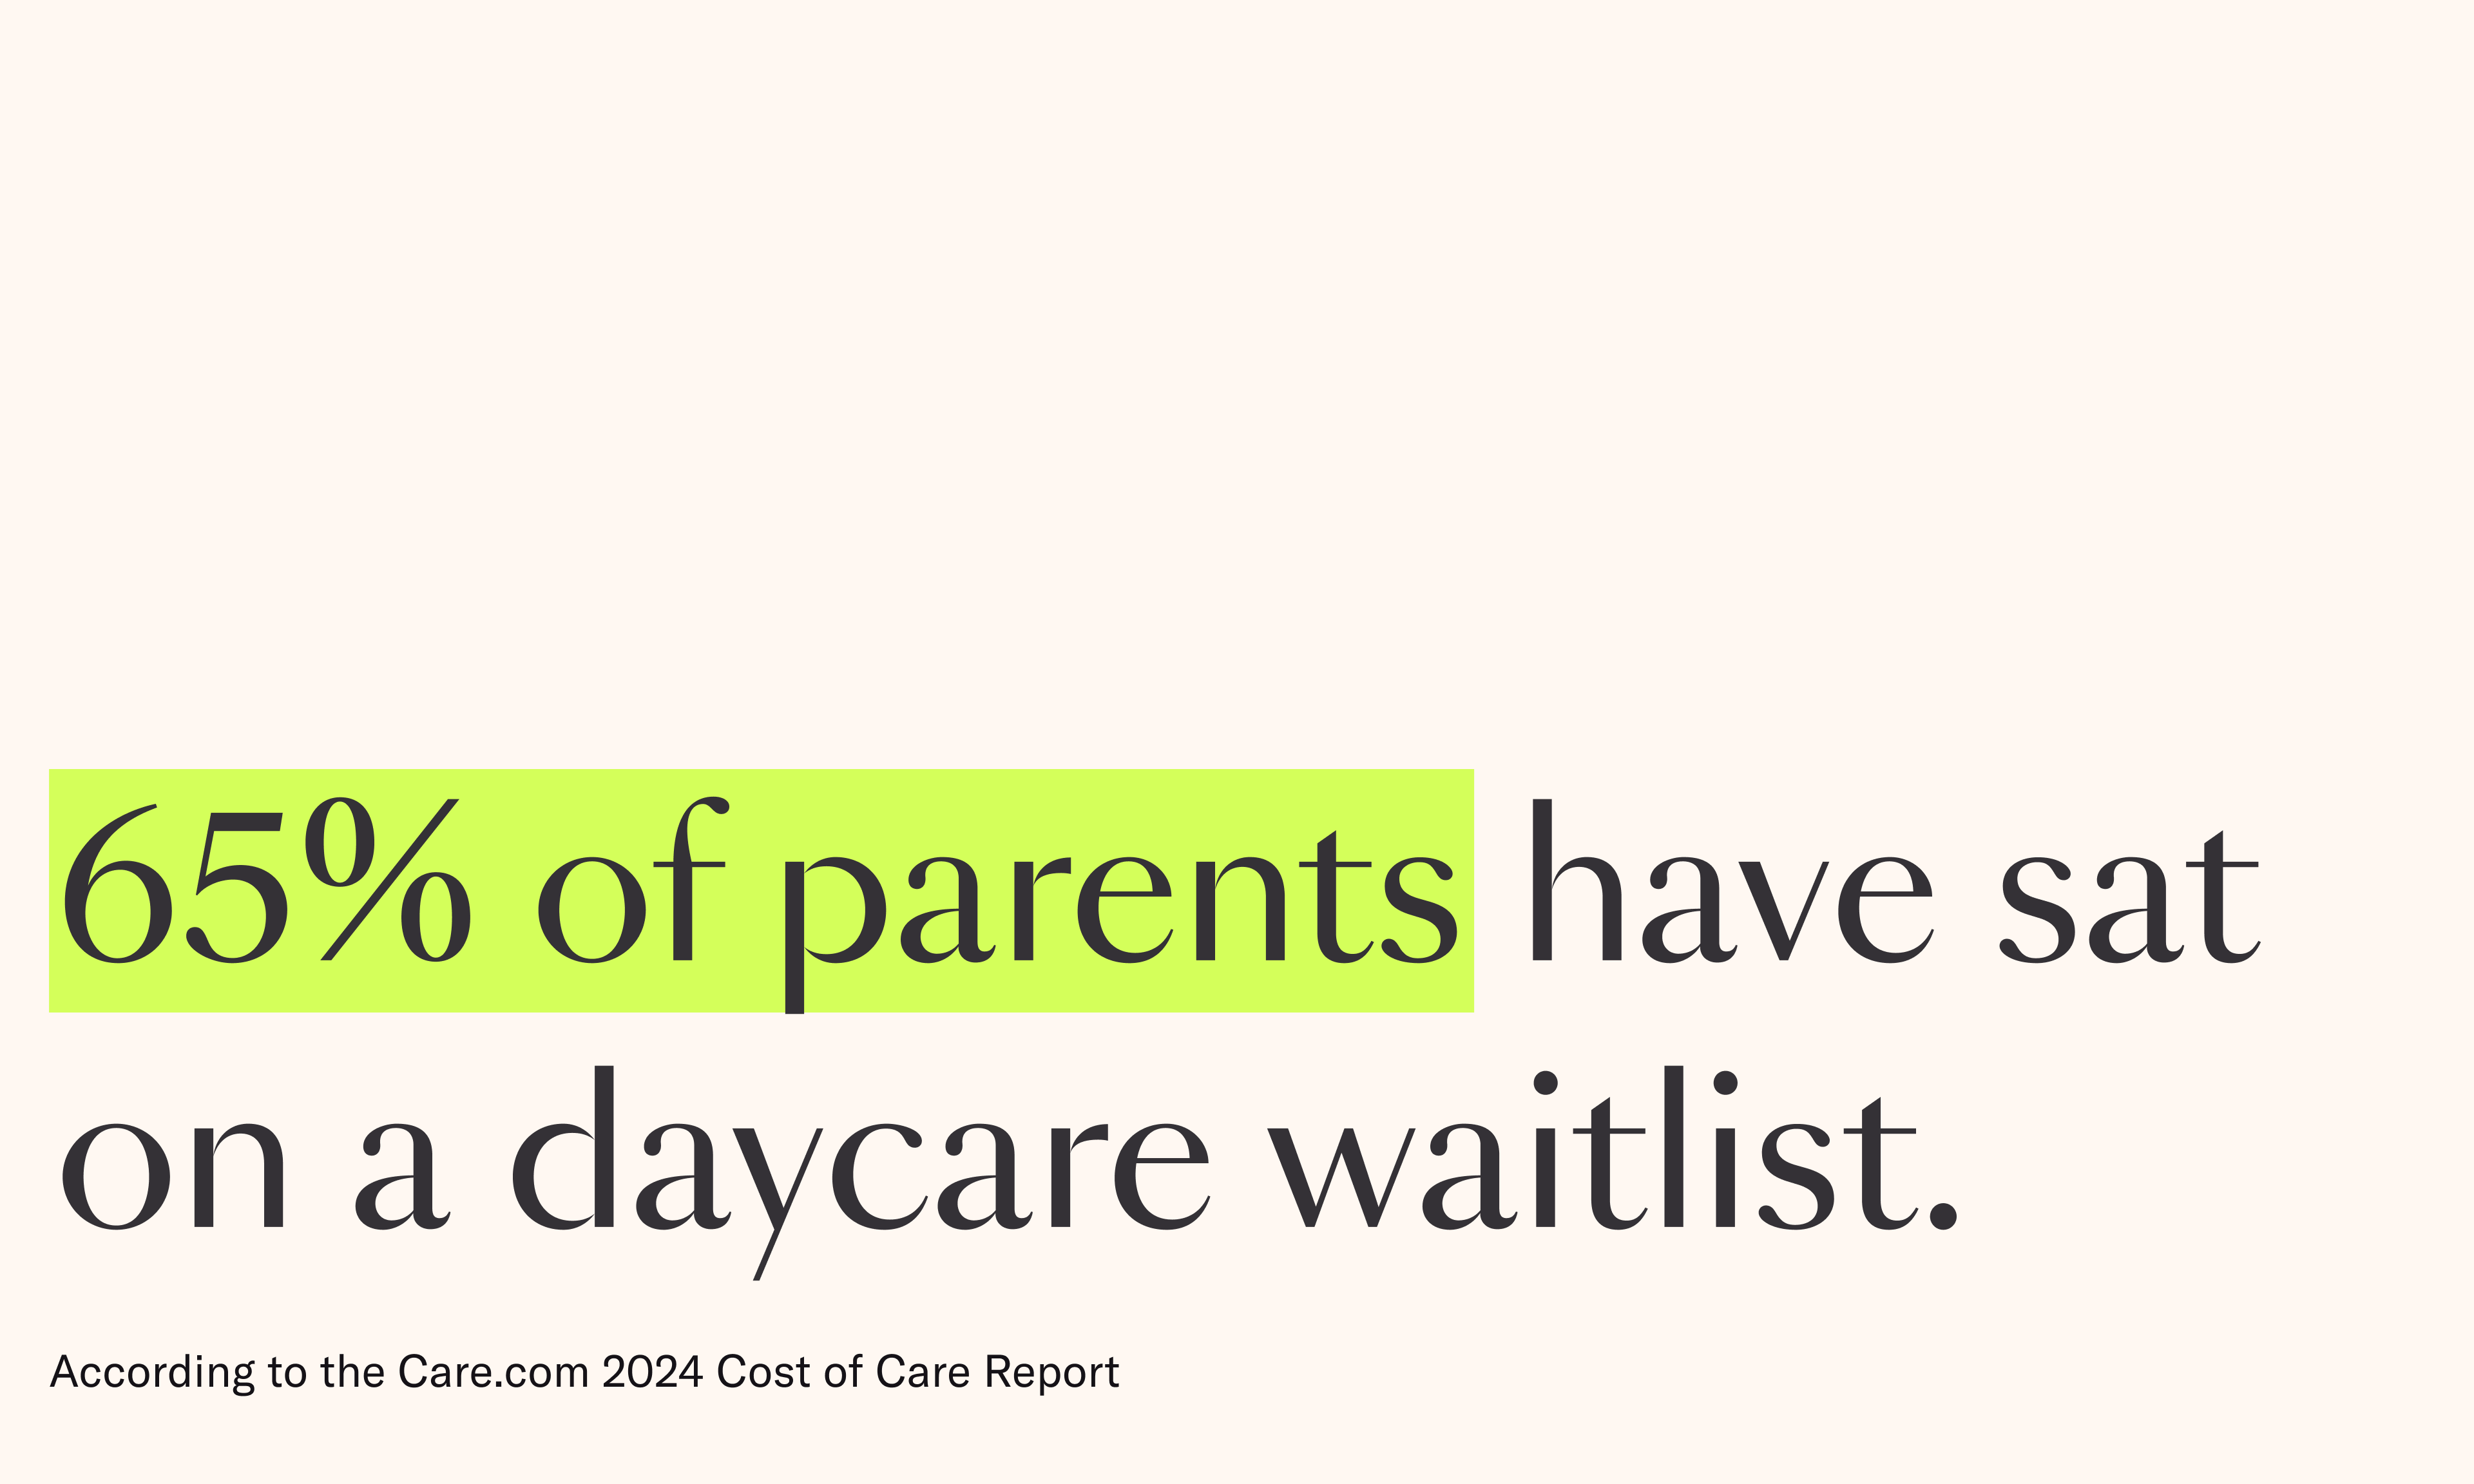 65% of parents have sat on a daycare waitlist.